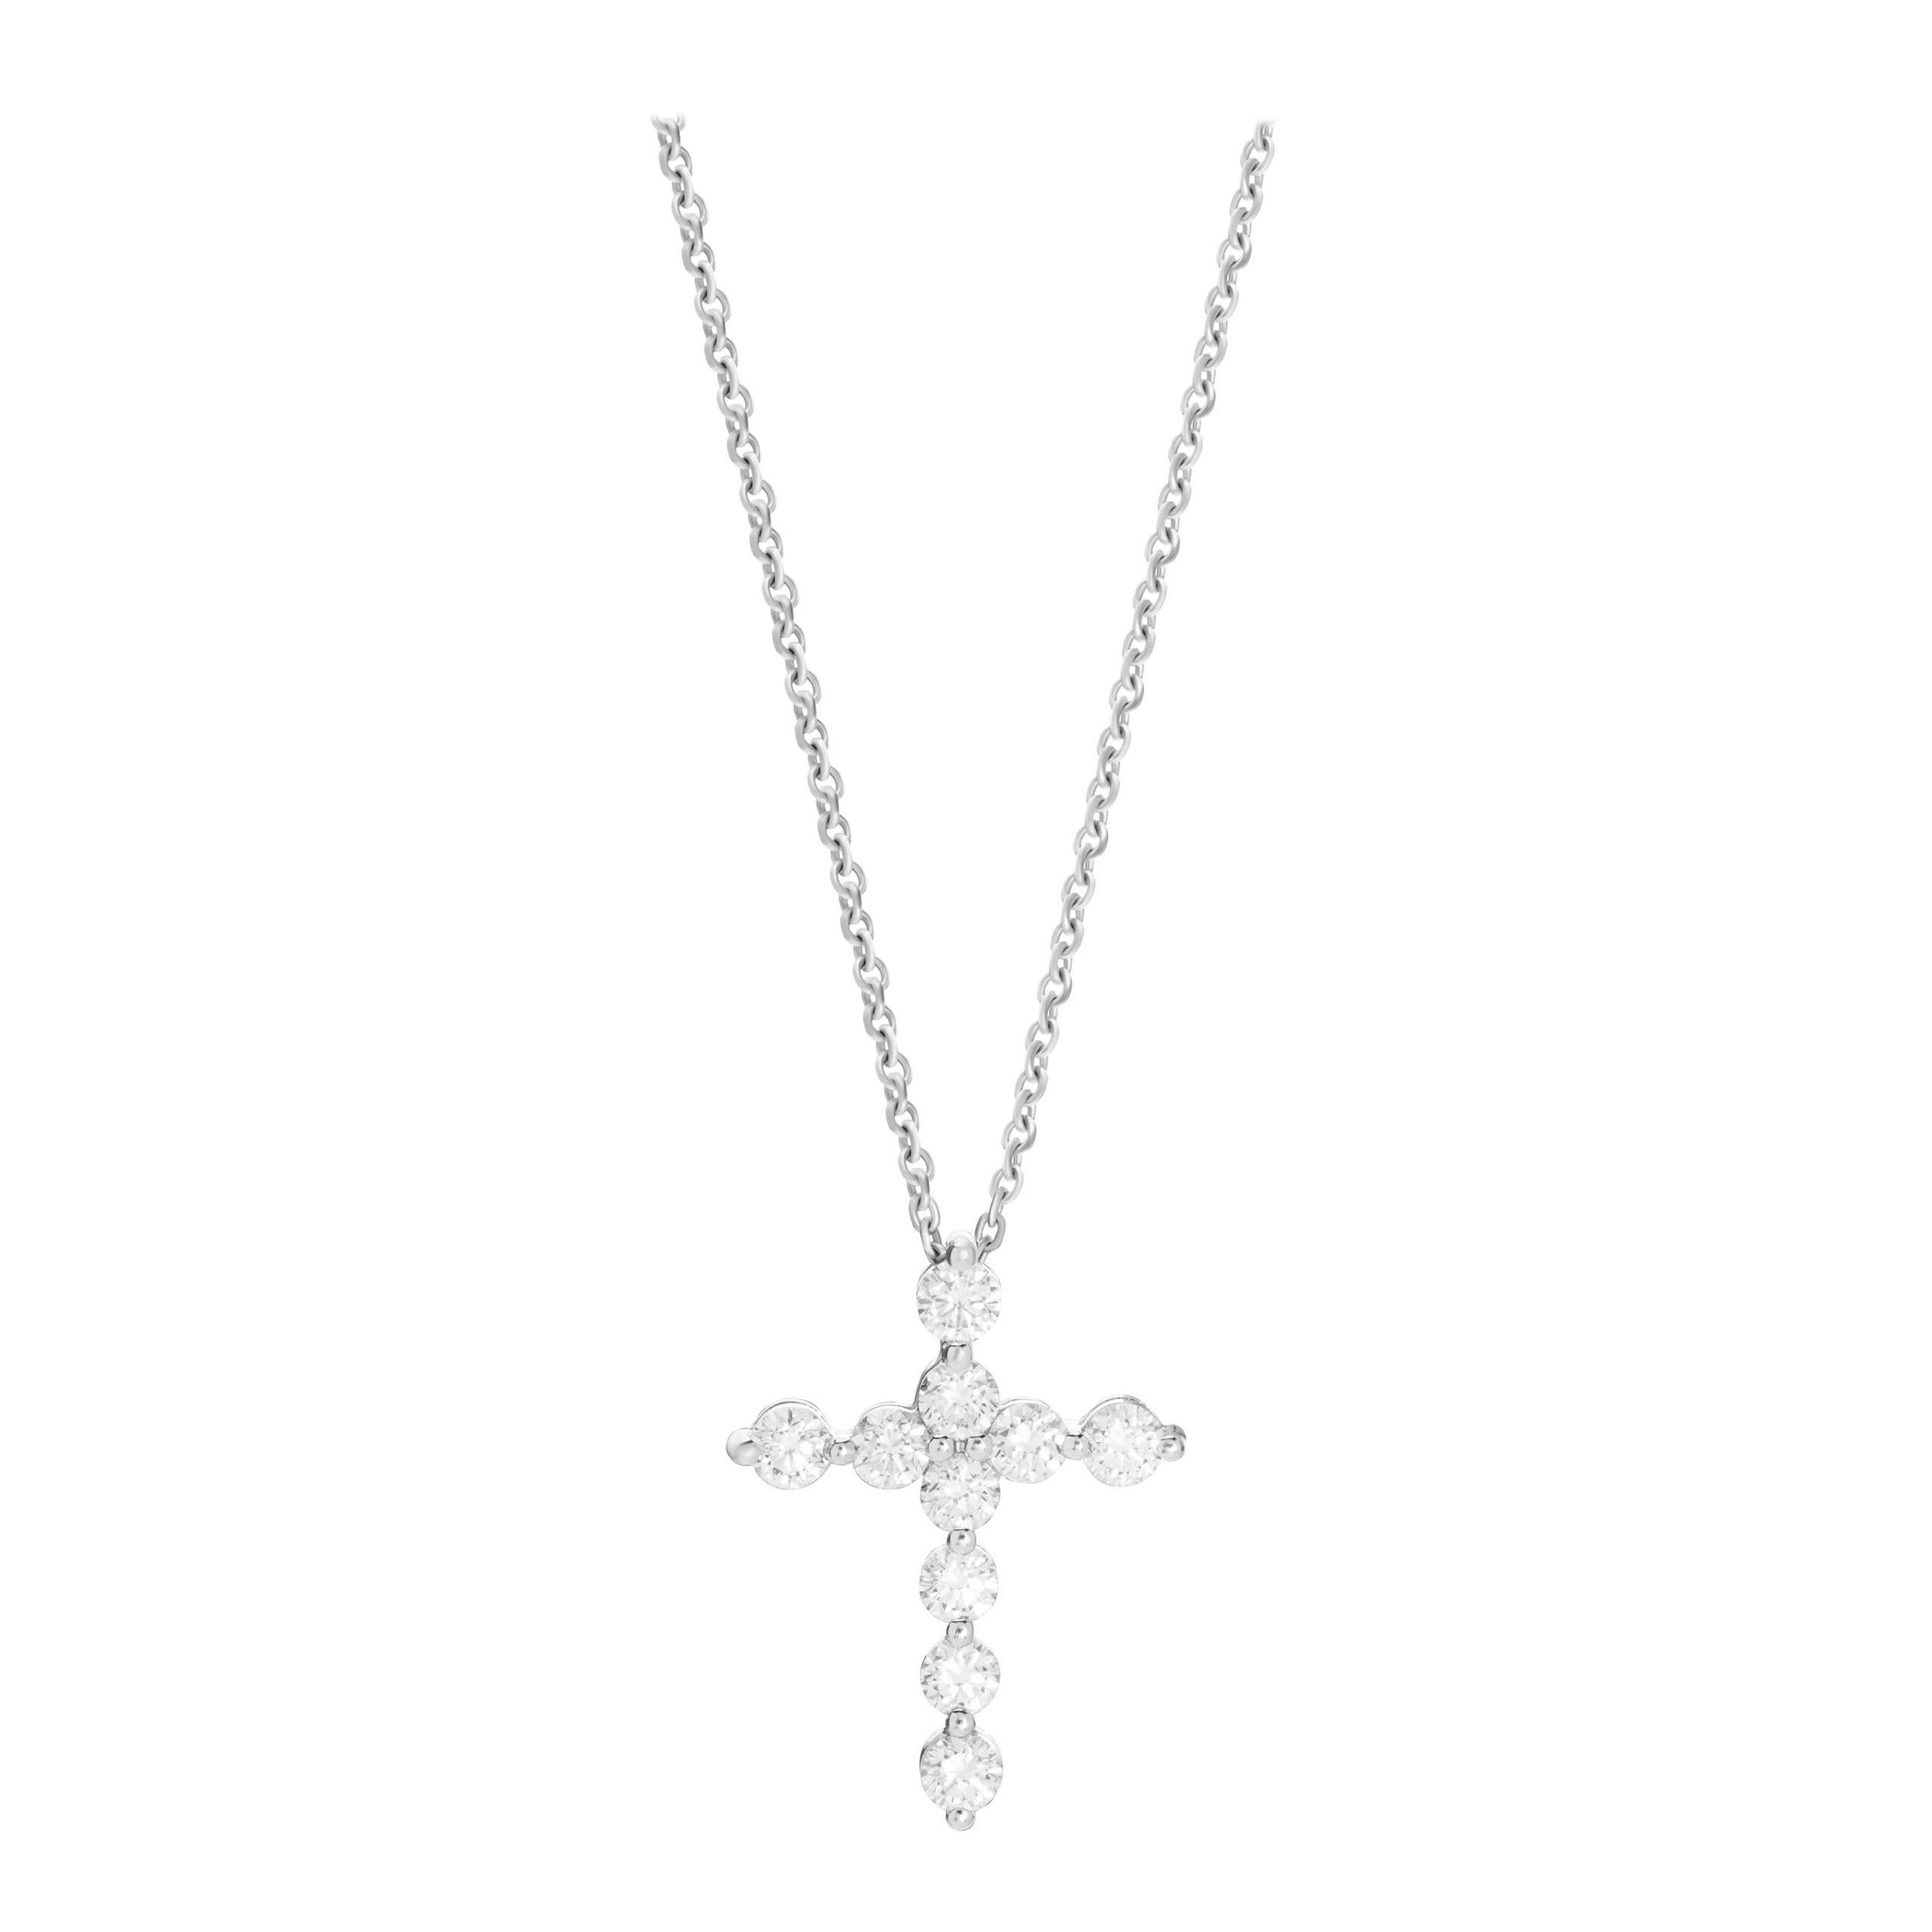 Collier pendentif croix en or blanc 18 carats avec diamants ronds brillants de 1,52 carat